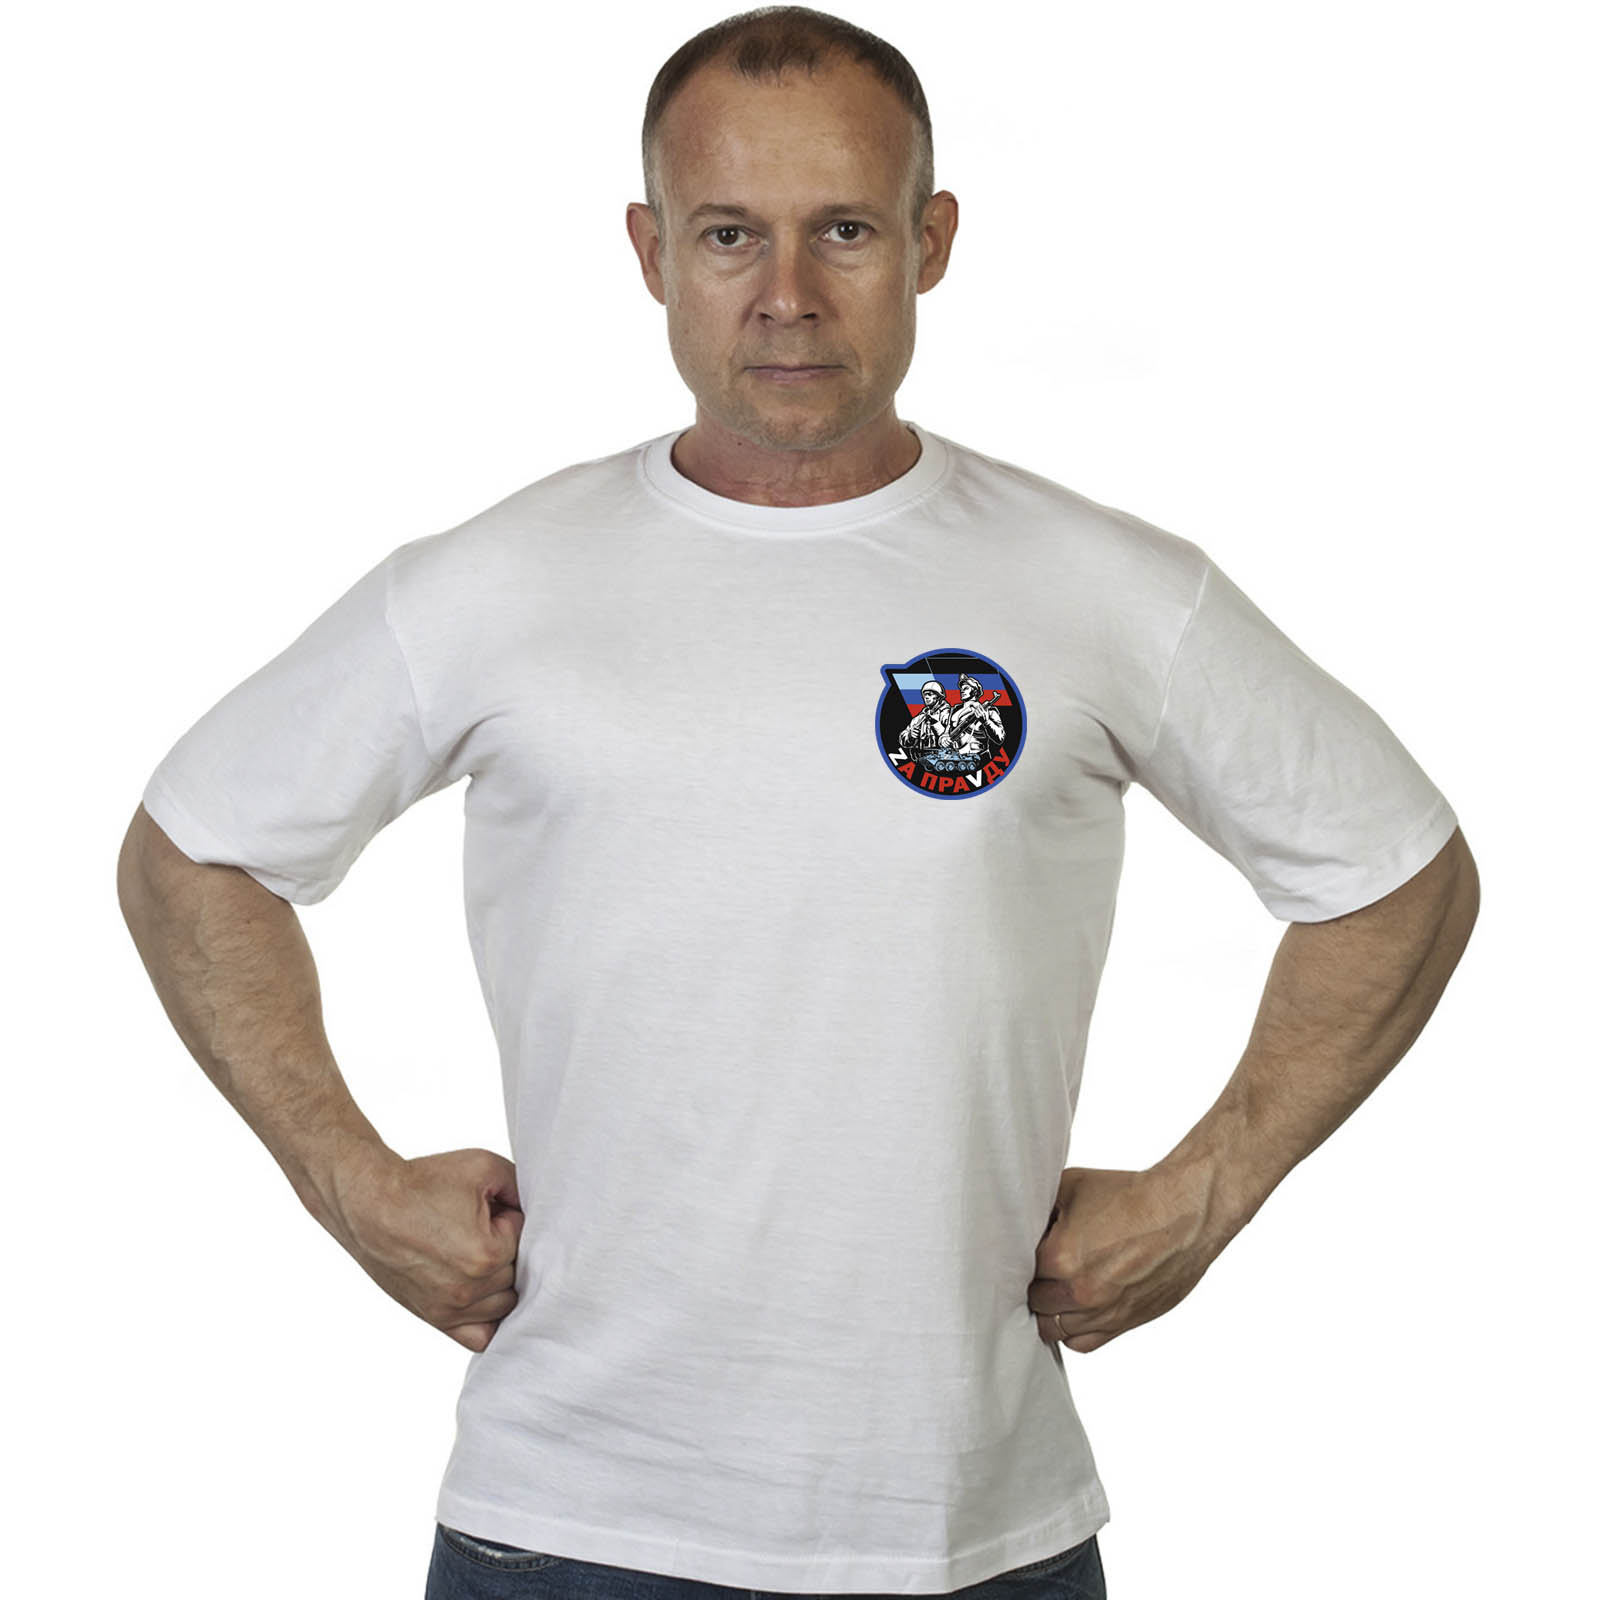 Белая футболка с трансфером "Zа праVду"